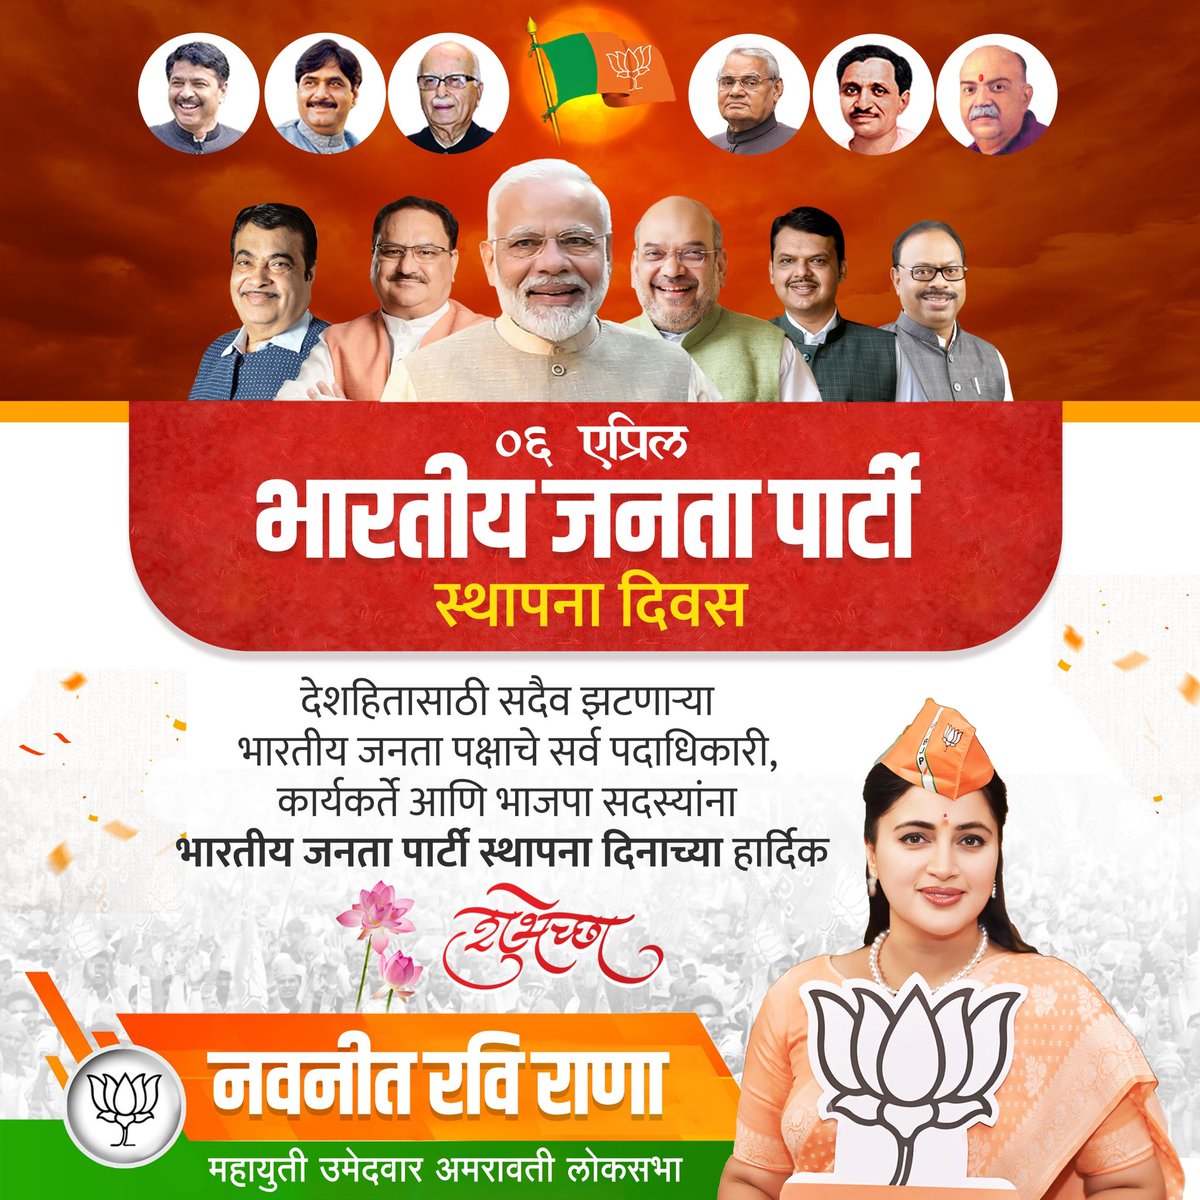 भारतीय जनता पार्टी स्थापना दिवस की हार्दिक शुभकामनाएं 
#BJPFoundationDay #SthapnaDiwas #BJP #DevendraFadnavis